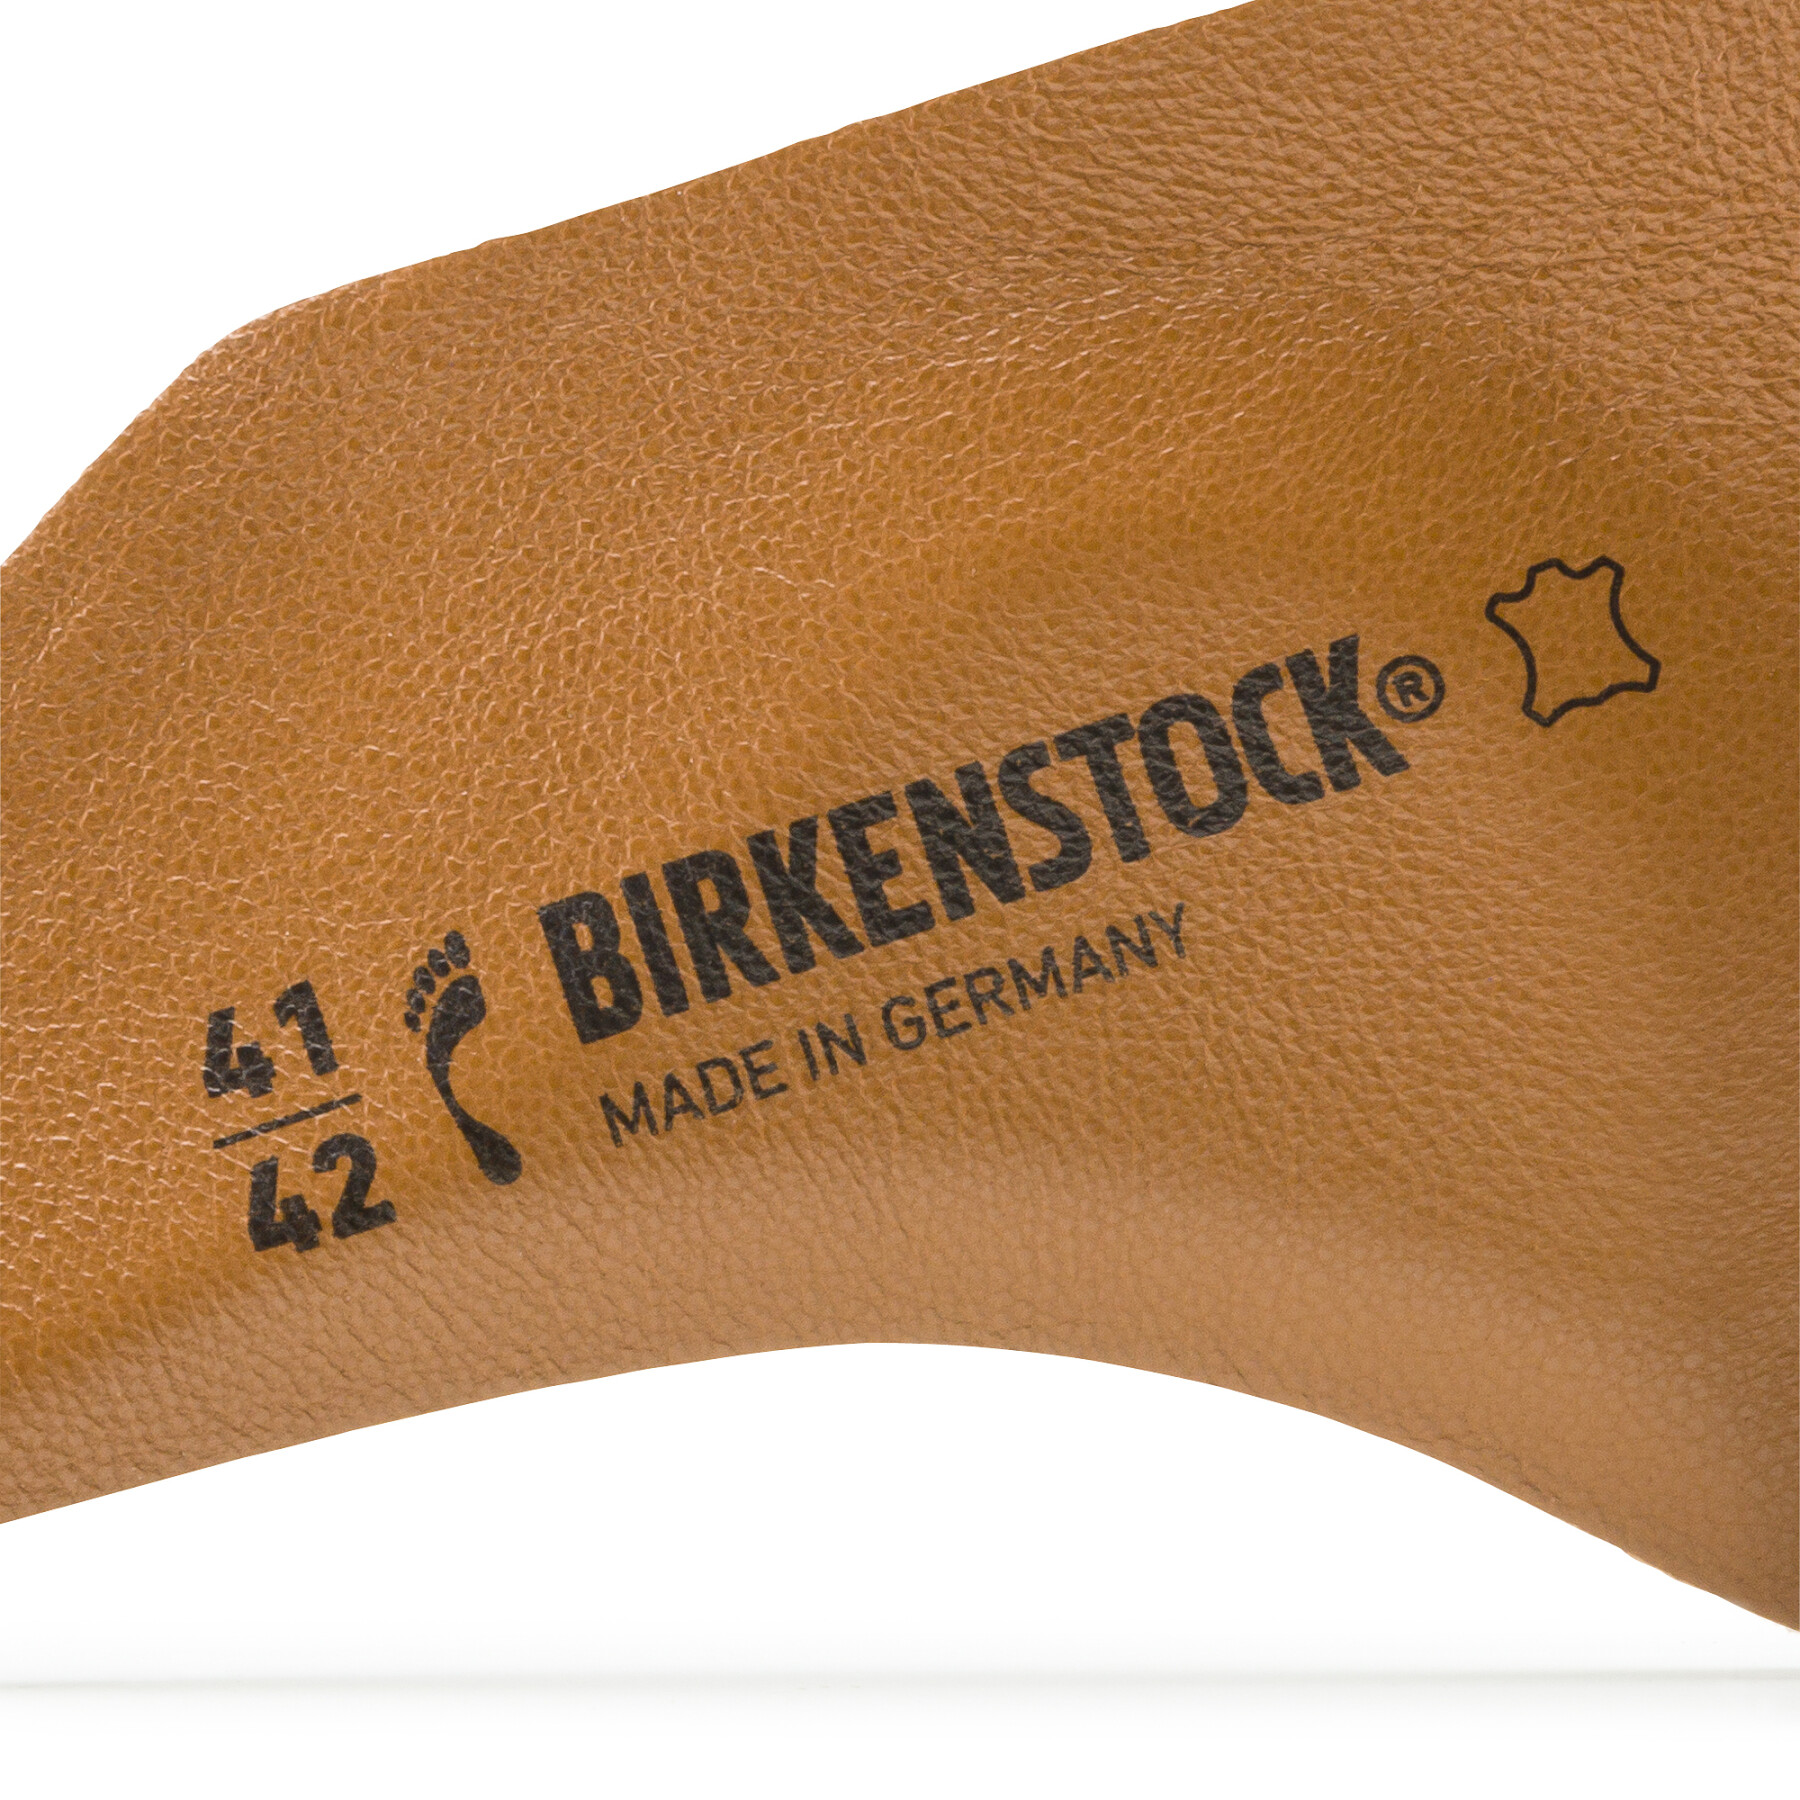 Solas estreitas Birkenstock Star Leather Lined Natural Leather